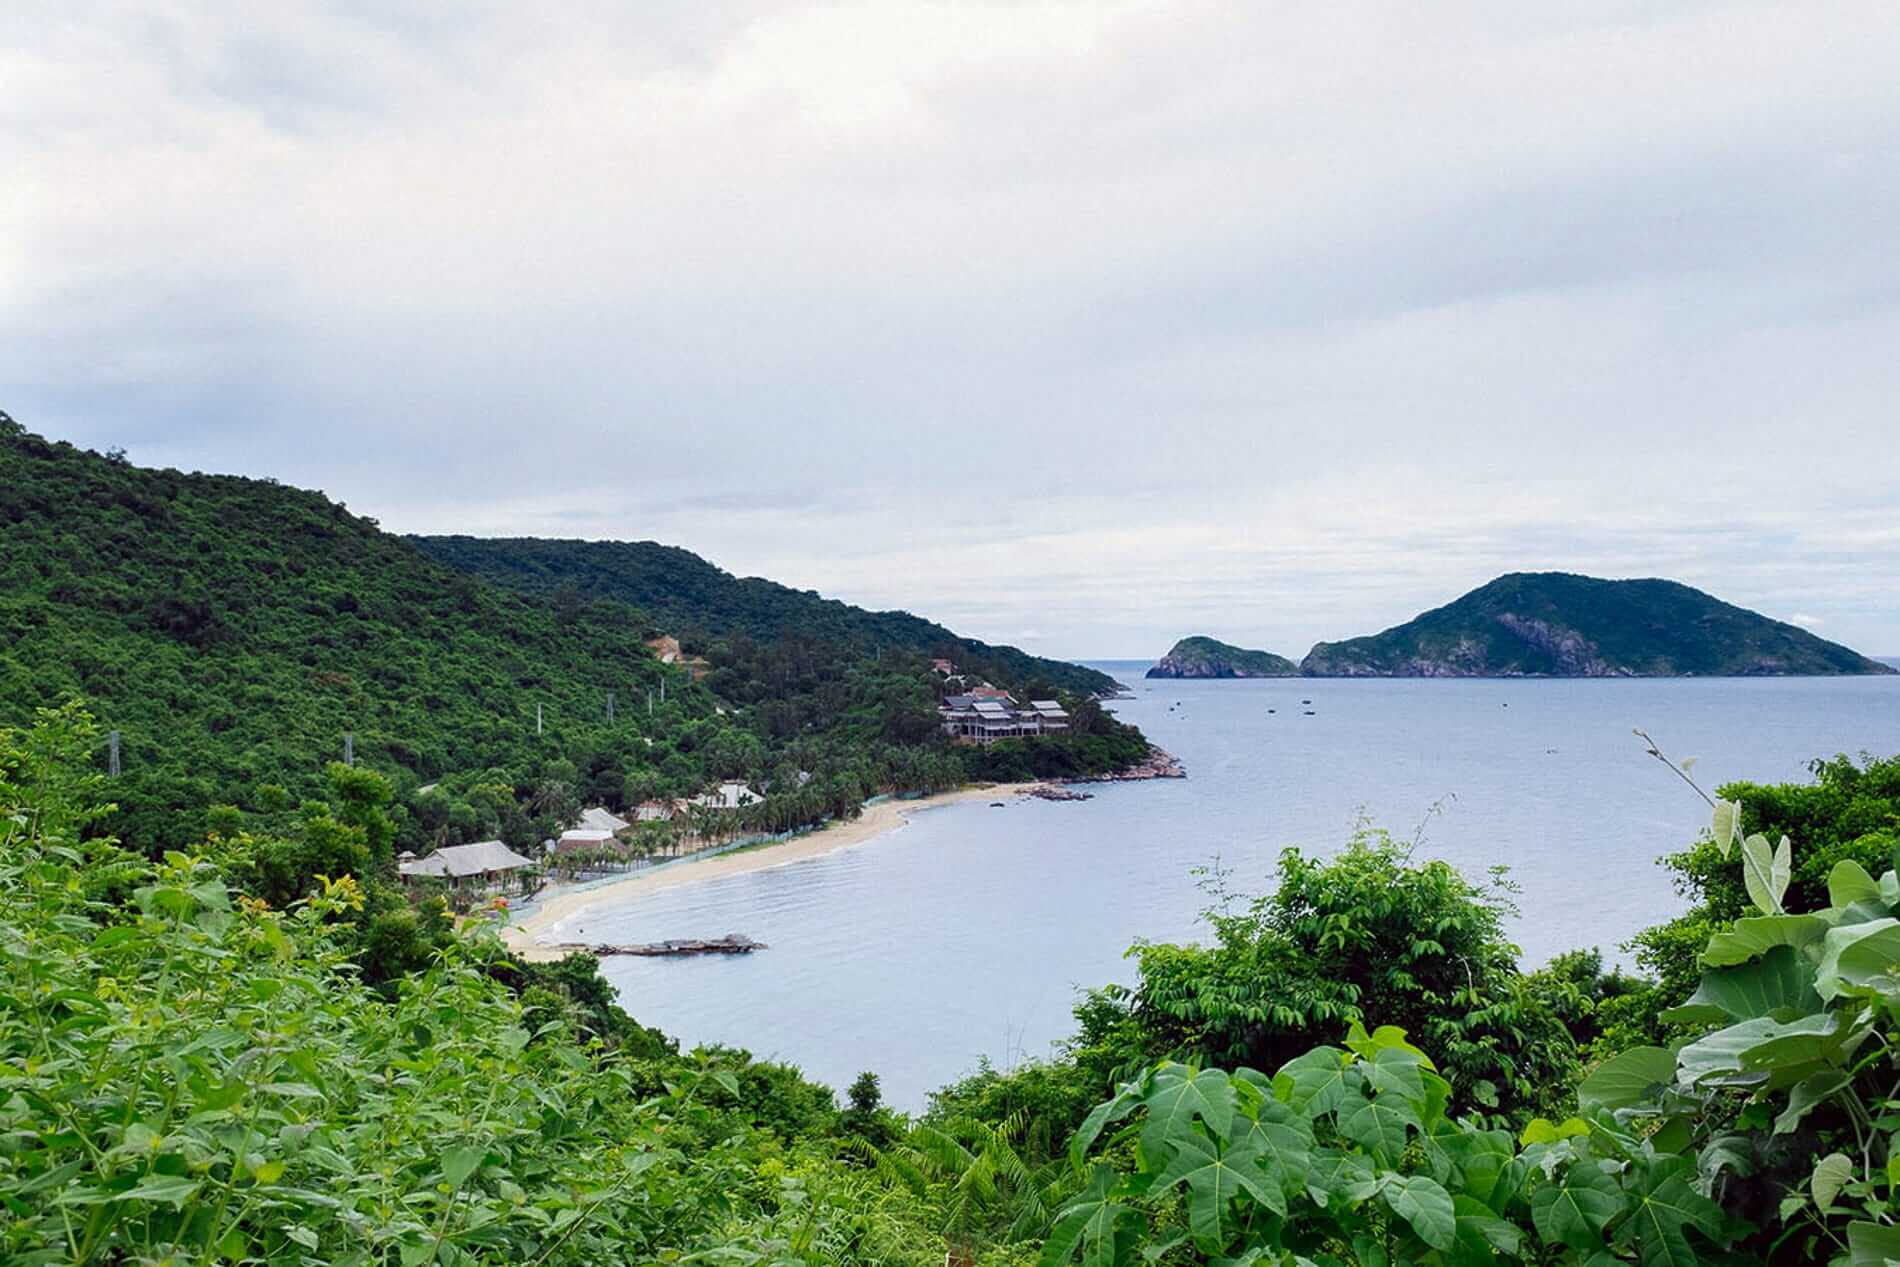 Cham Island